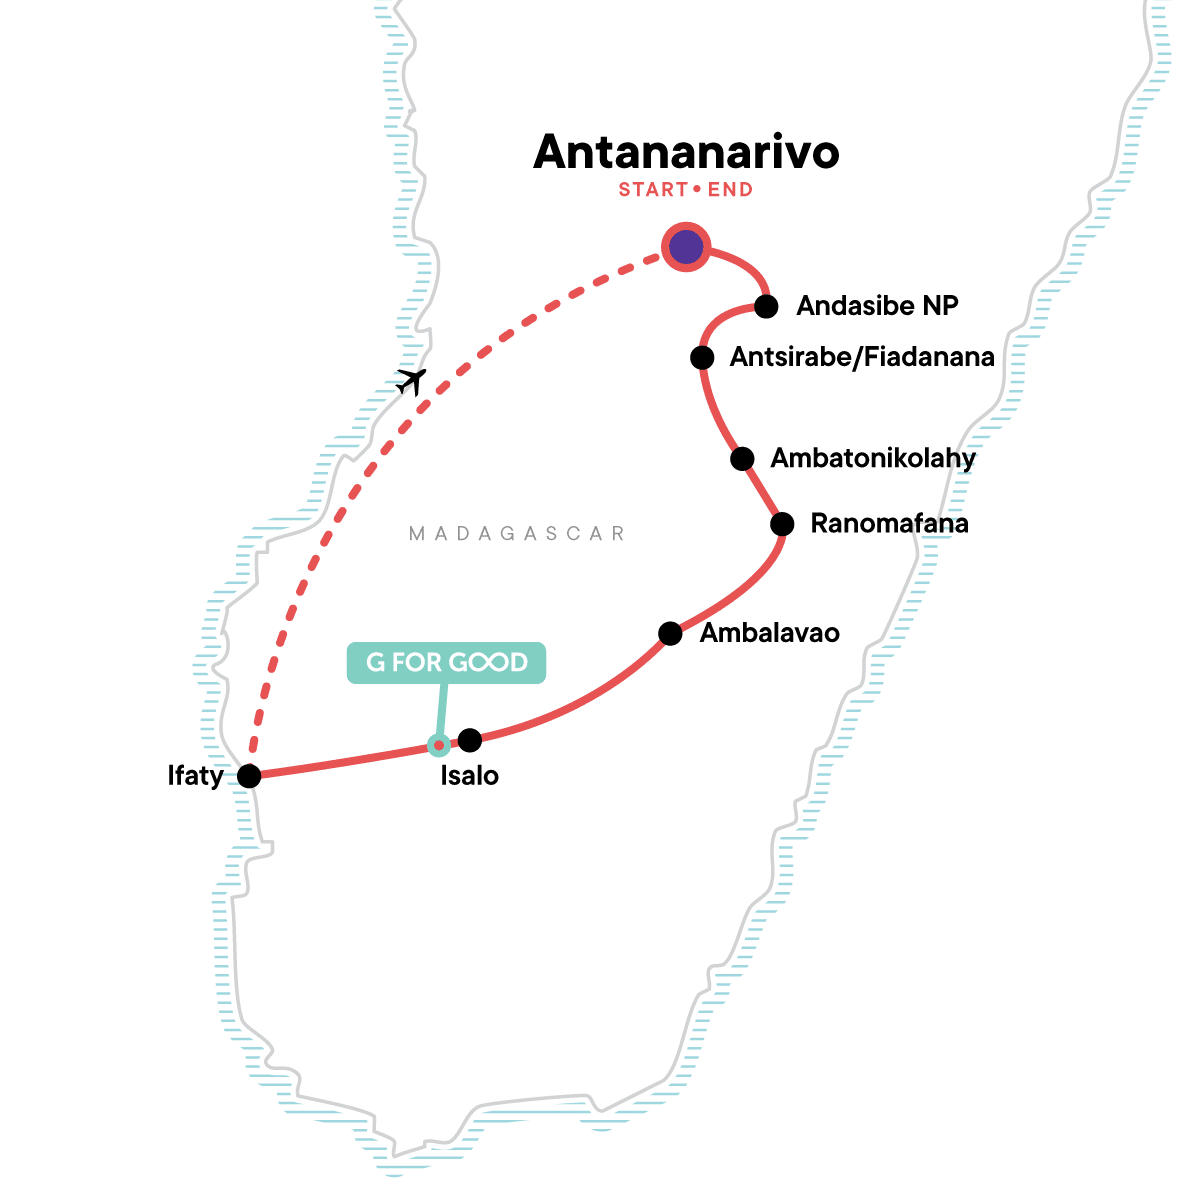 A map of the tour begins in Antananarivo and continues south to the following destinations: Andasibe National Park, Antsirabe/Fiadanana, Ambatonikolahy, Ranomafana, Ambalavao, Isalo, and Ifaty. The map then shows a flight back to Antananarivo from Ifaty.